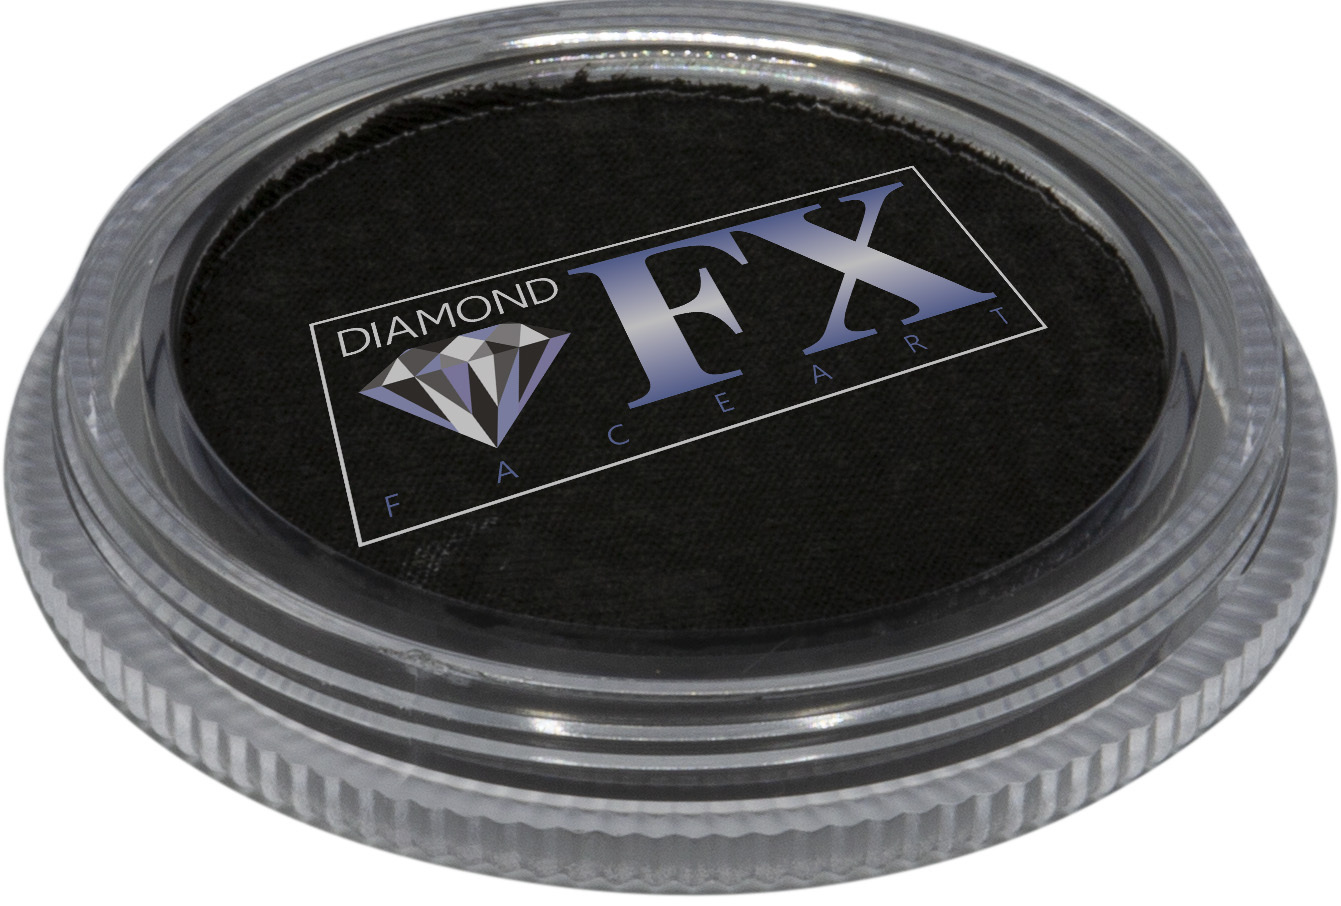 Diamond FX Black 30g - Small Image